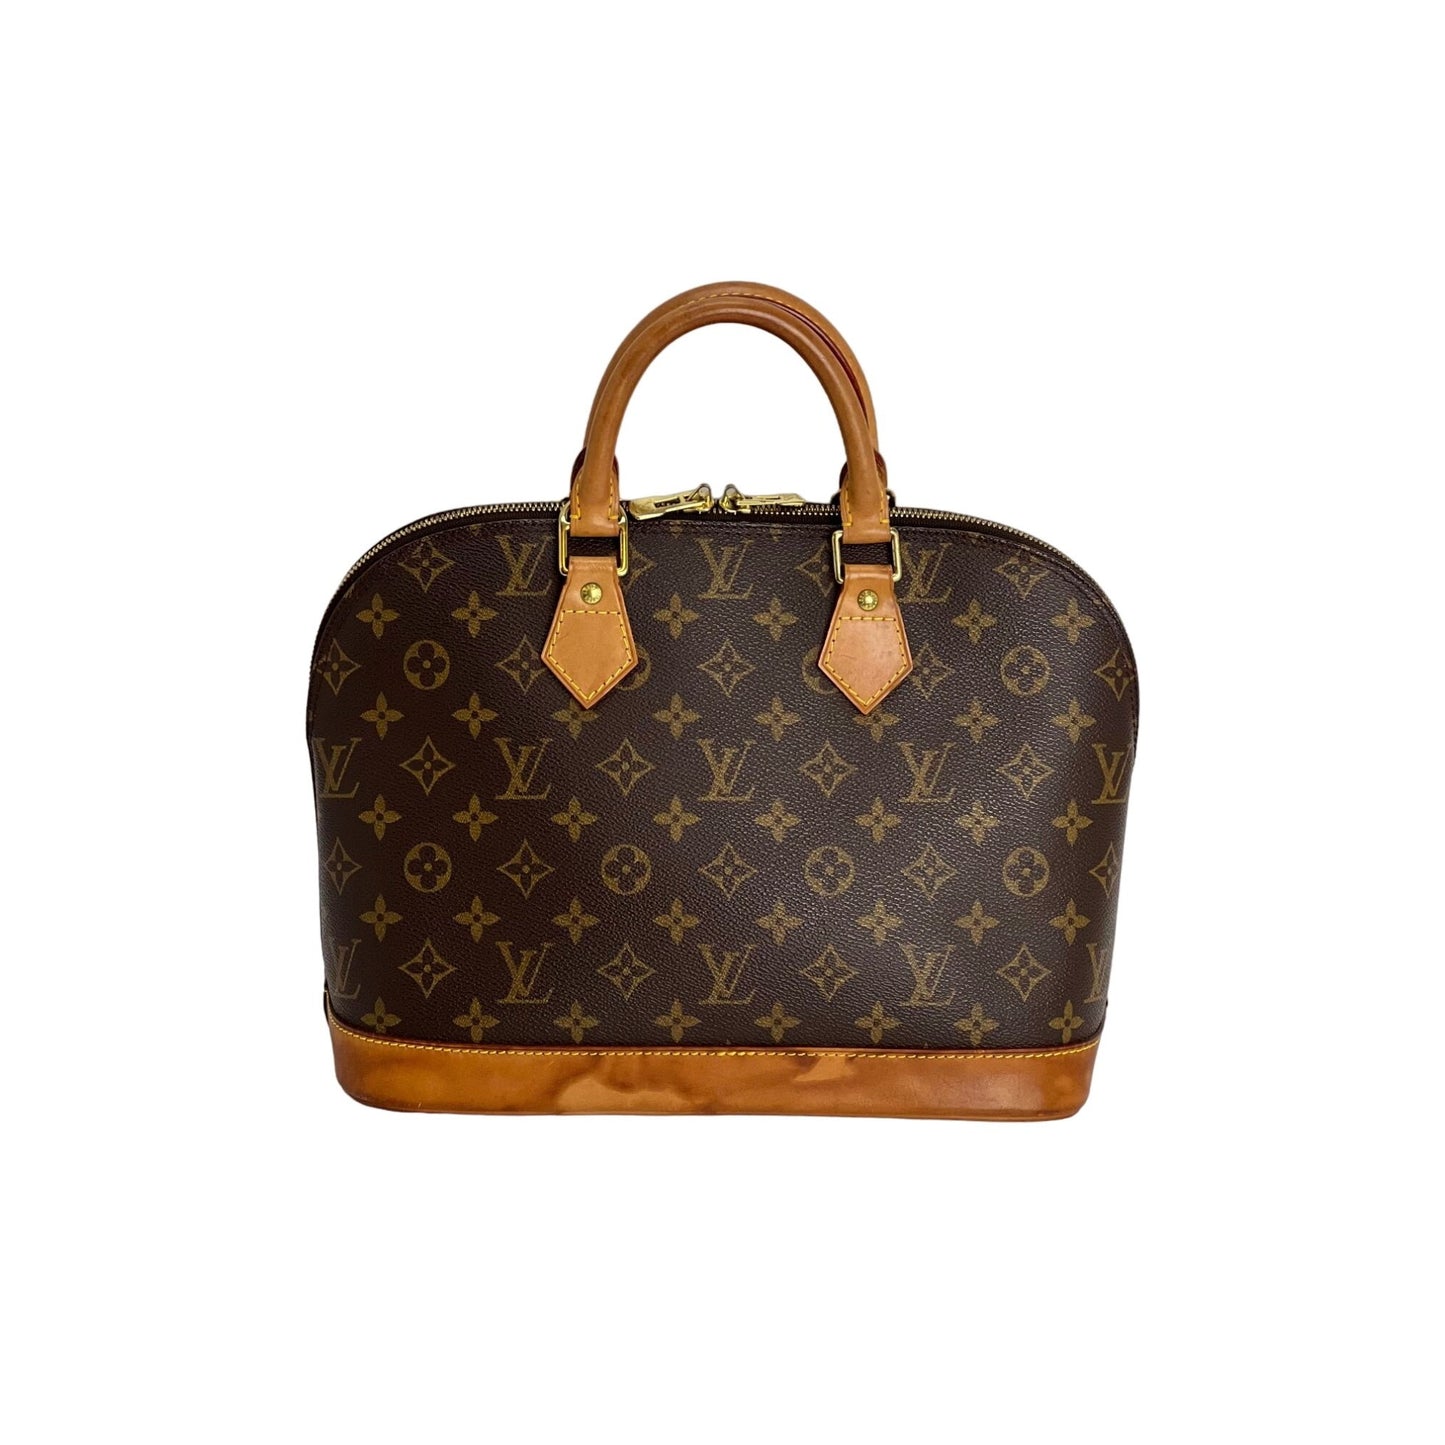 Pre-Owned Louis Vuitton Alma PM Monogram Handbag - Pristine